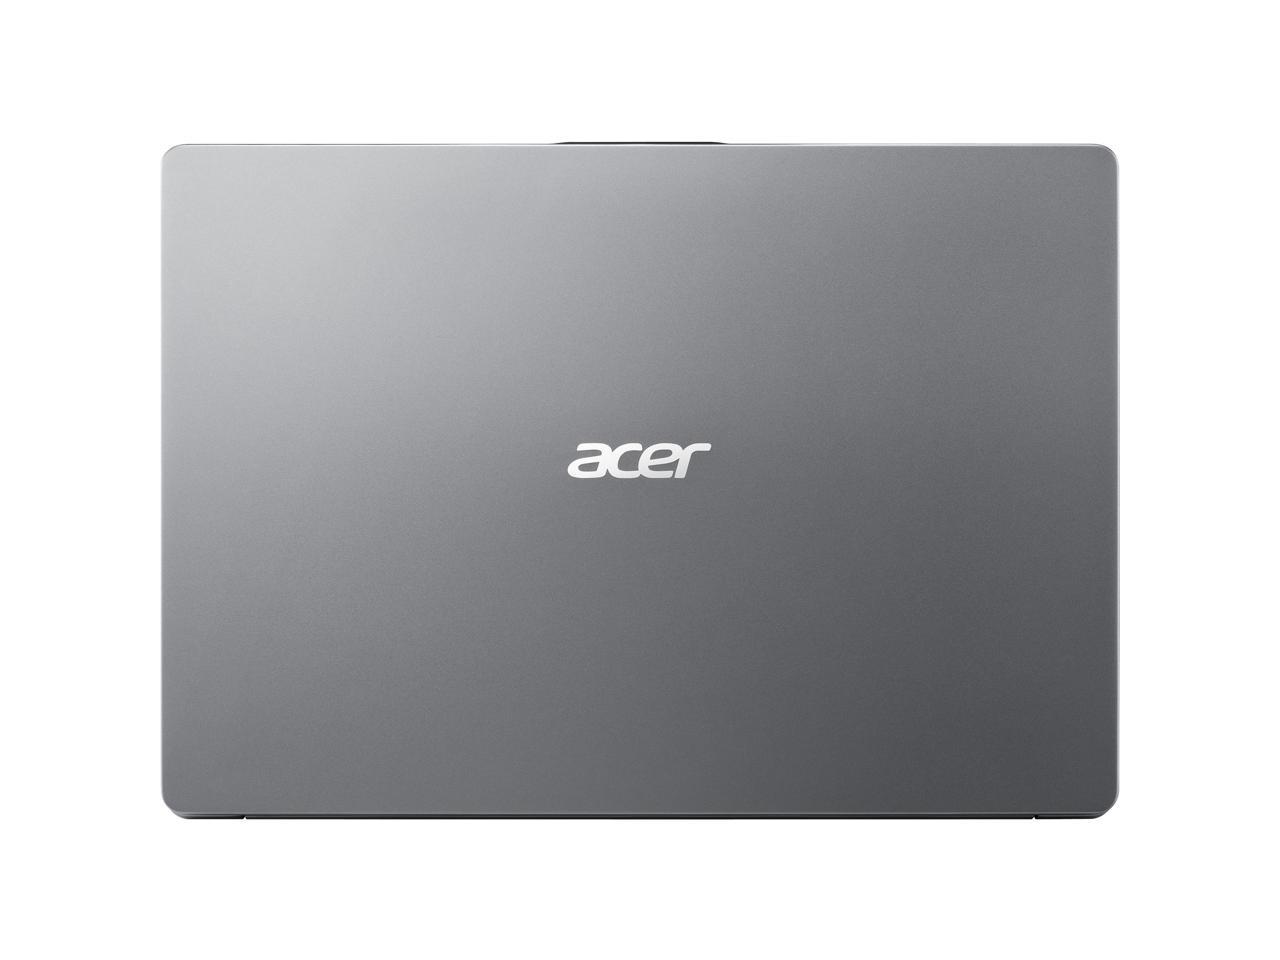 Acer Swift 1 SF114-32-P7BG 14" LCD Notebook - Intel Pentium Silver N5000 Quad-core (4 Core) 1.10 GHz - 4 GB DDR4 SDRAM - 64 GB Flash Memory - Windows 10 Home in S mode 64-bit - 1920 x 1080 - In-p